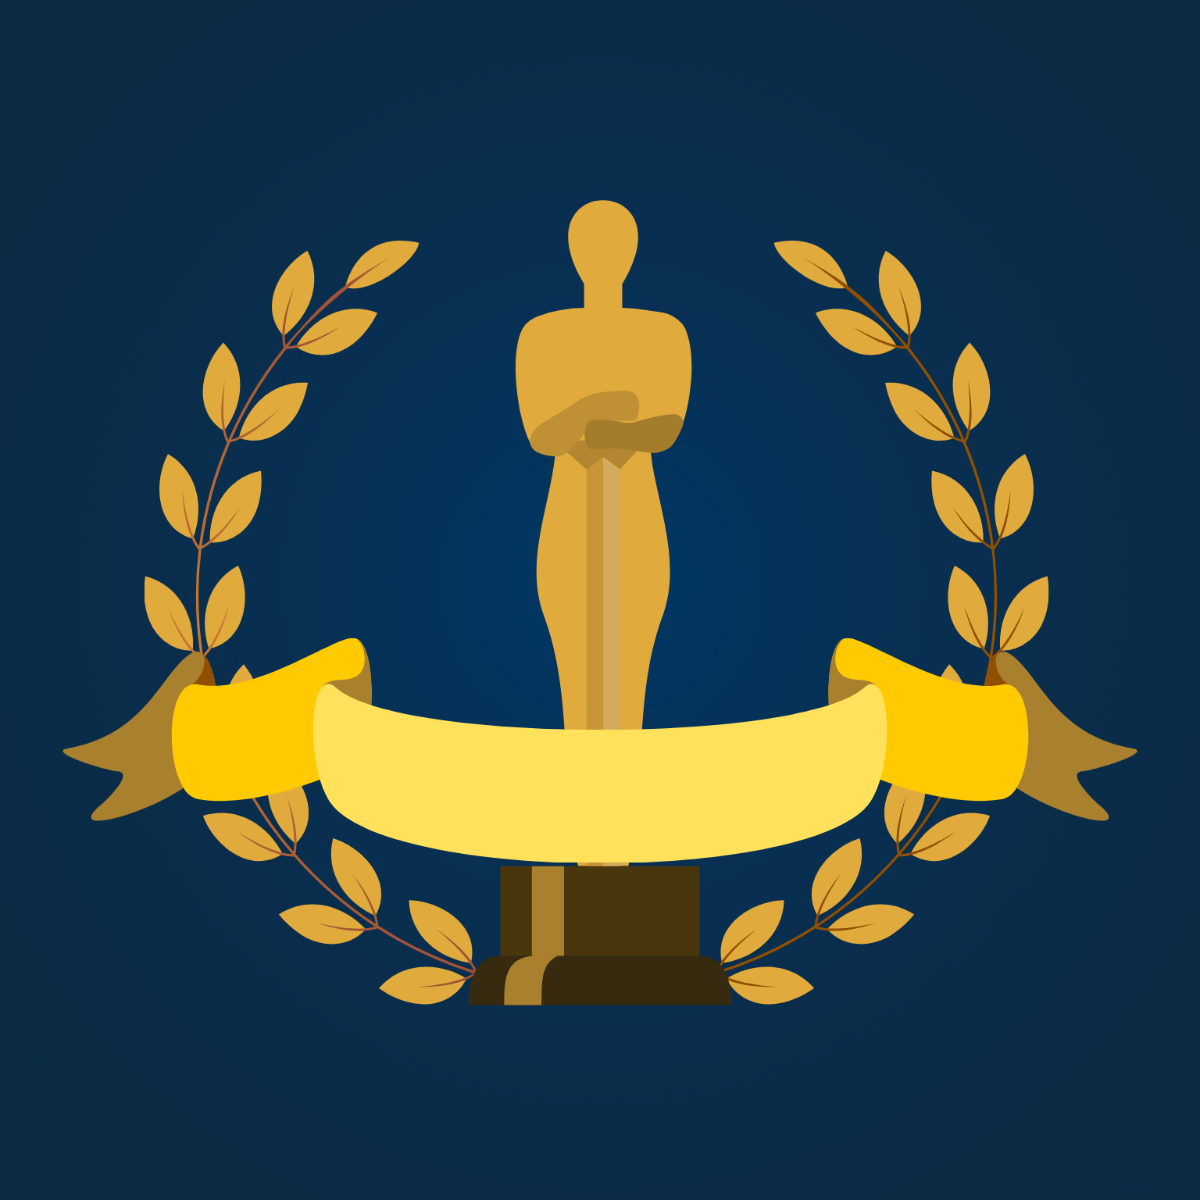 The Academy Awards Vector Template